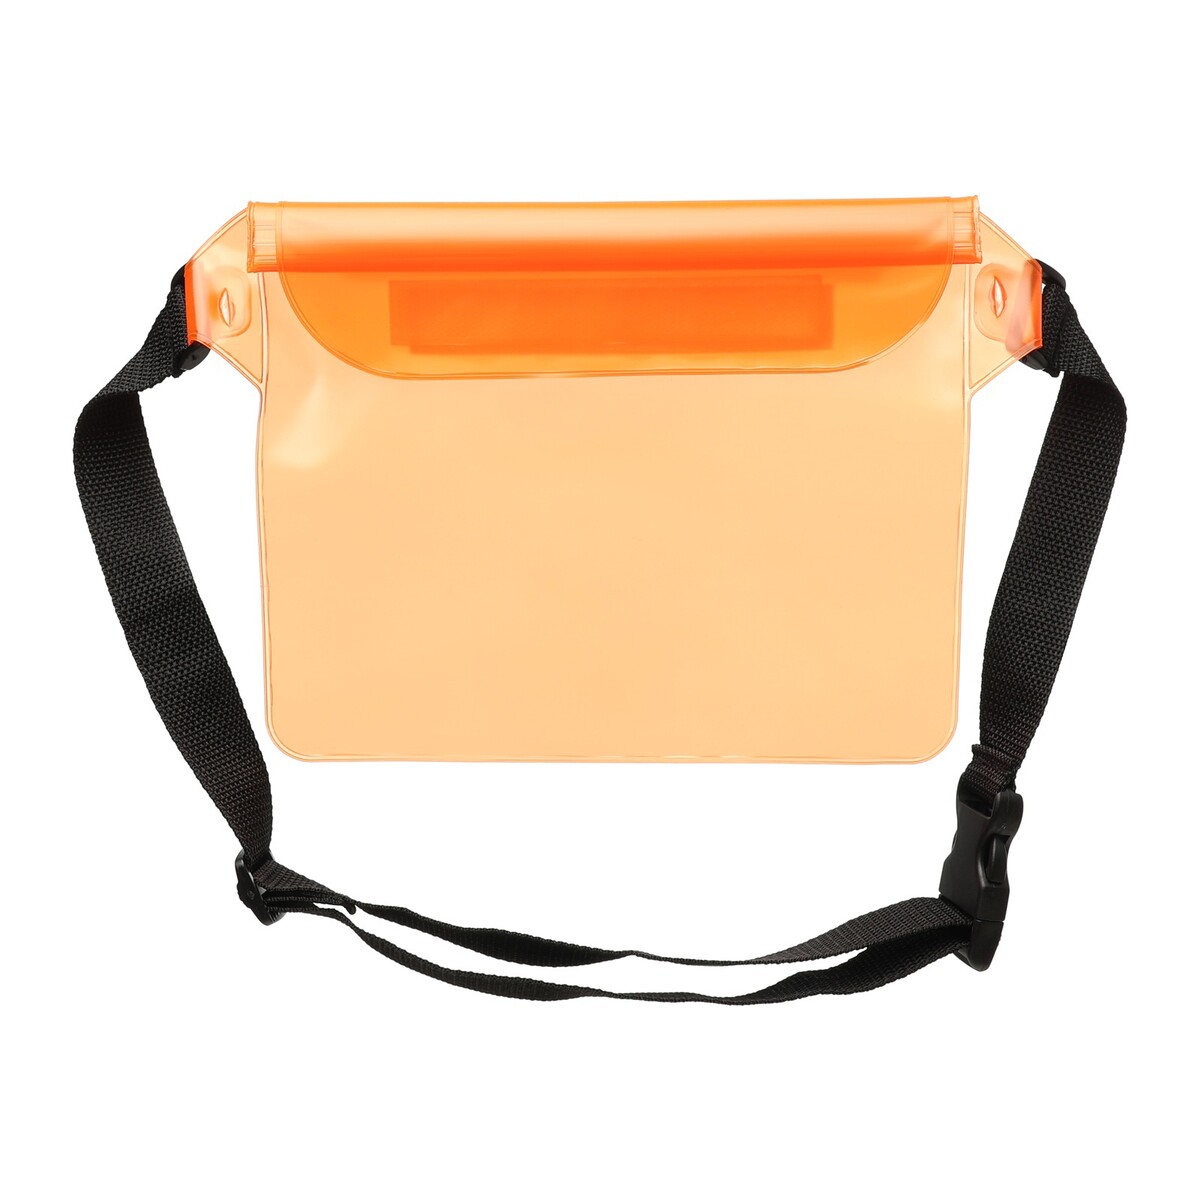 Сумка поясная, водонепроницаемая, оранжевая, 22 х 18 см сумка поясная водонепроницаемая оранжевая 22 х 18 см